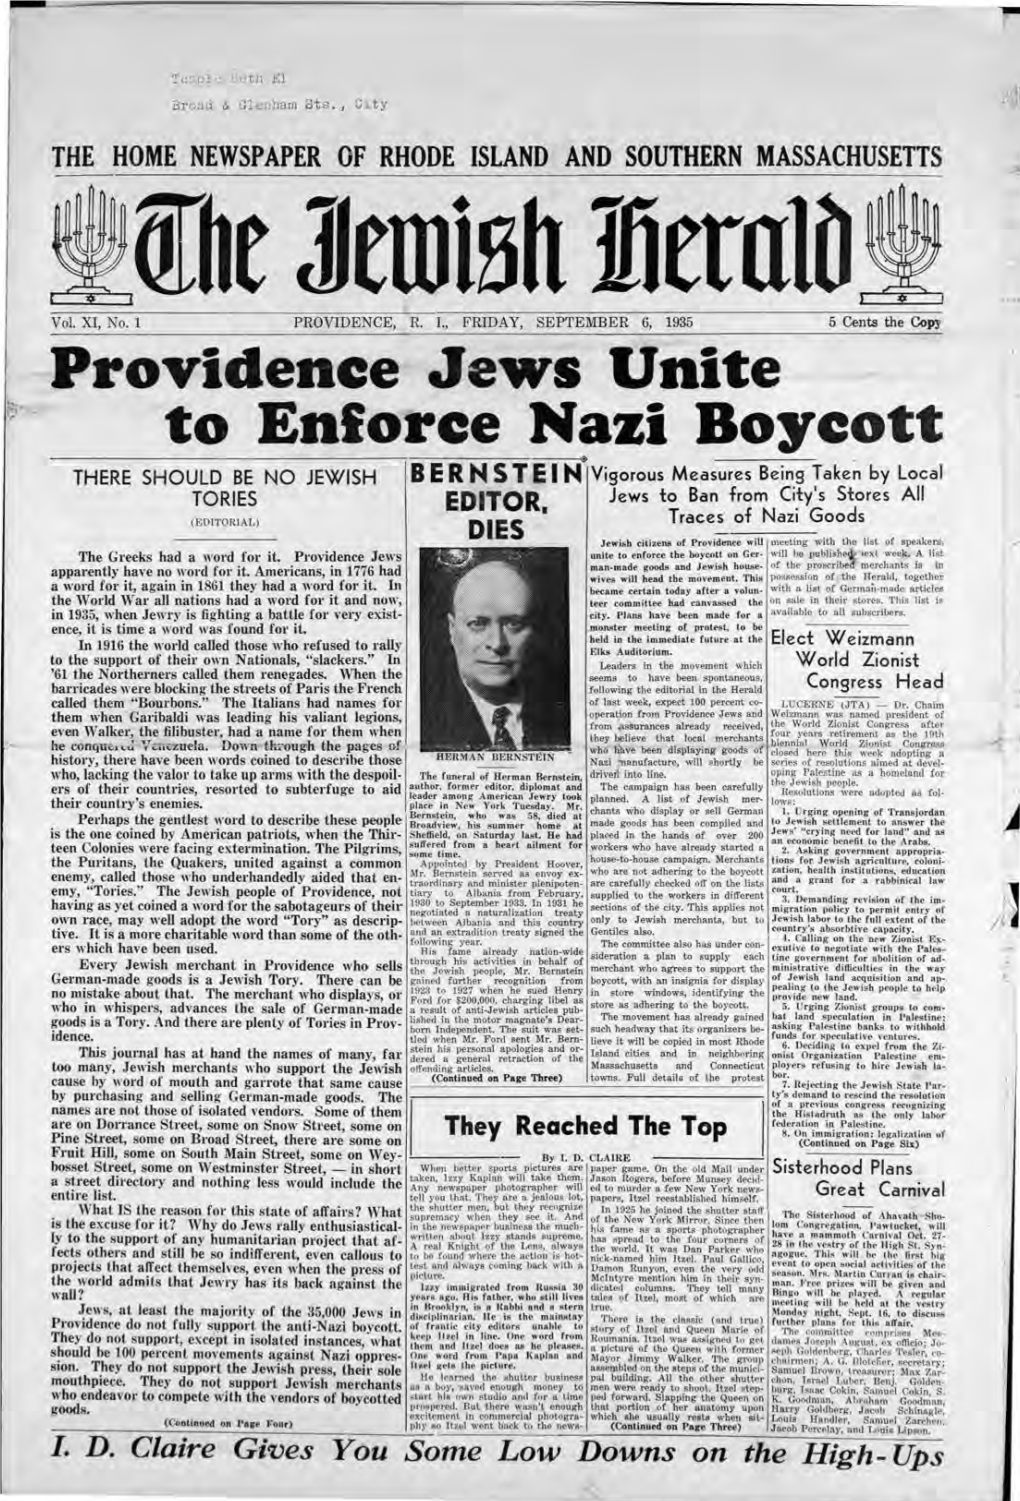 Providence Jews Unite to Enforce Nazi Boycott